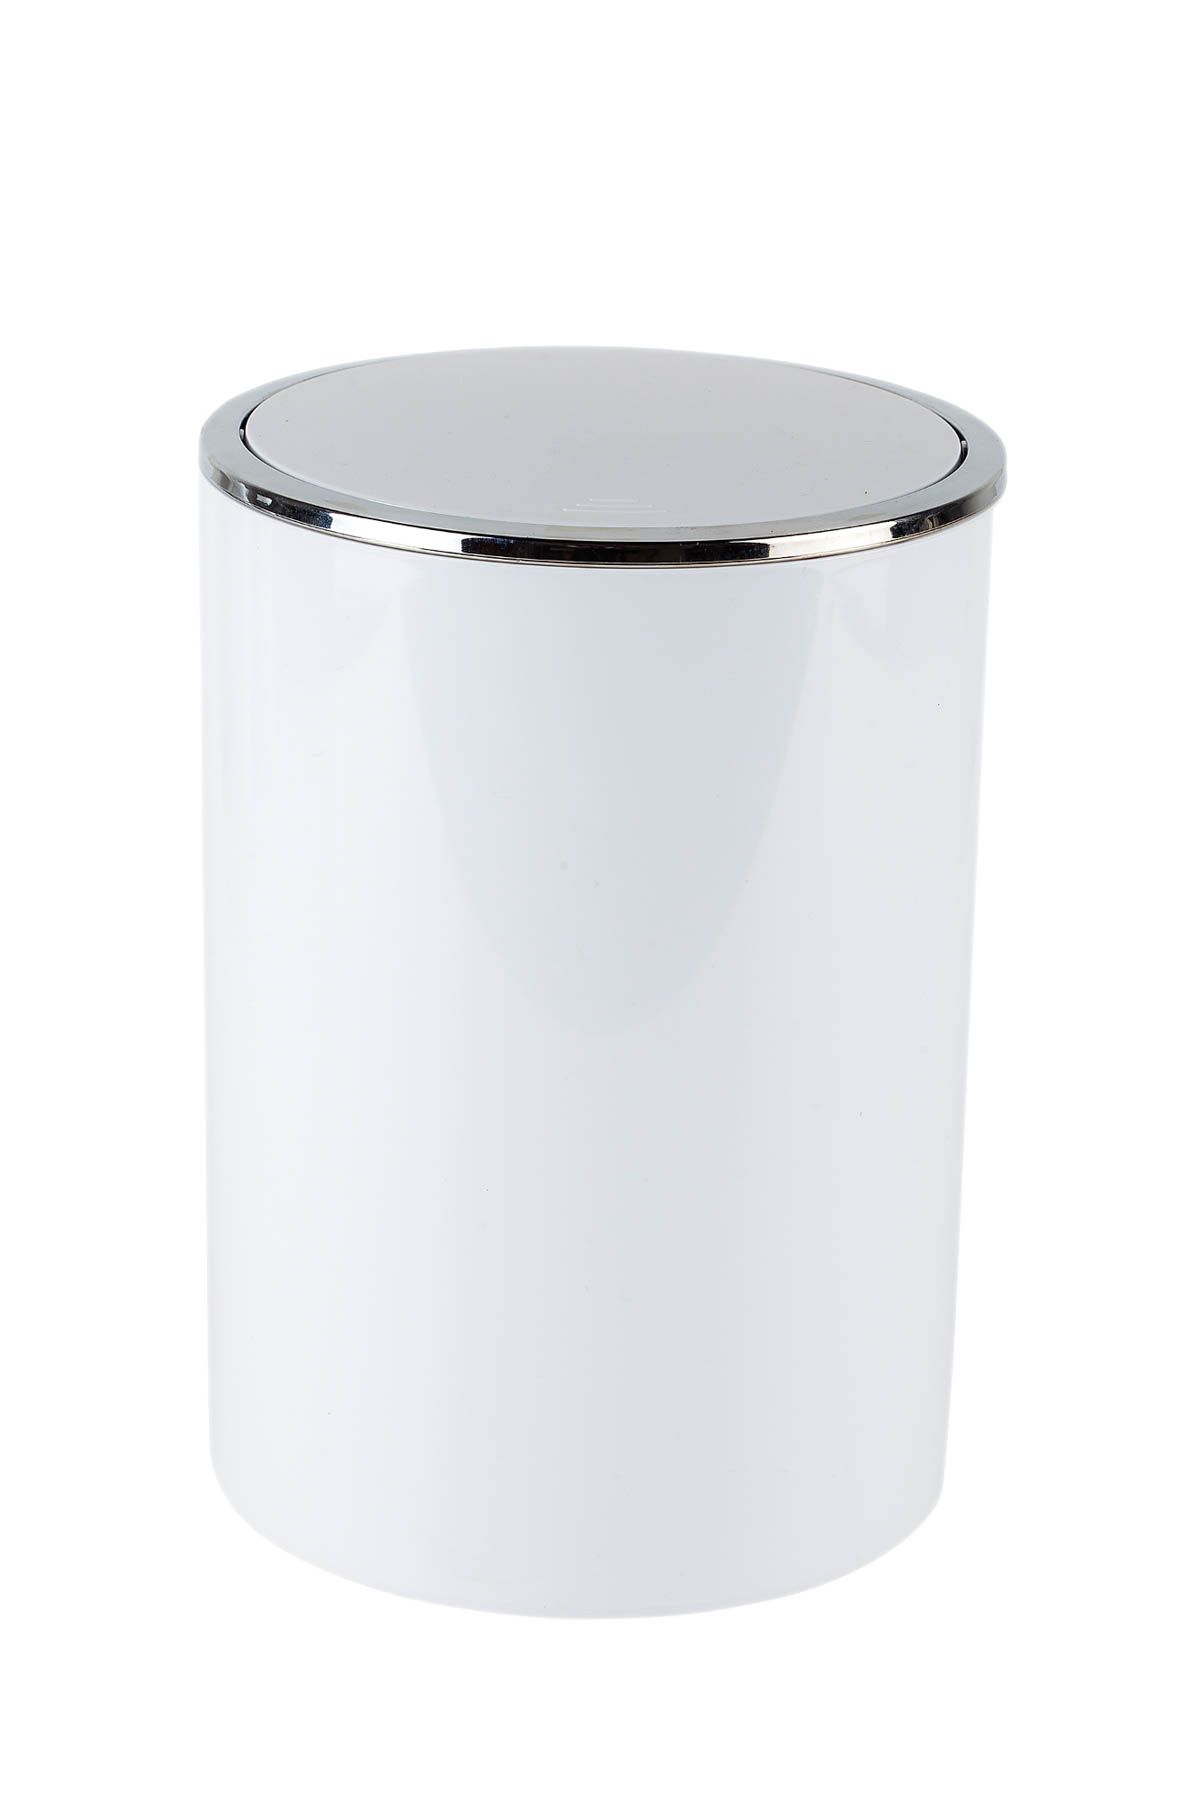 Prima Nova Lenox Banyo Mutfak Ofis Çöp Kovası 6 Lt Beyaz (E35)